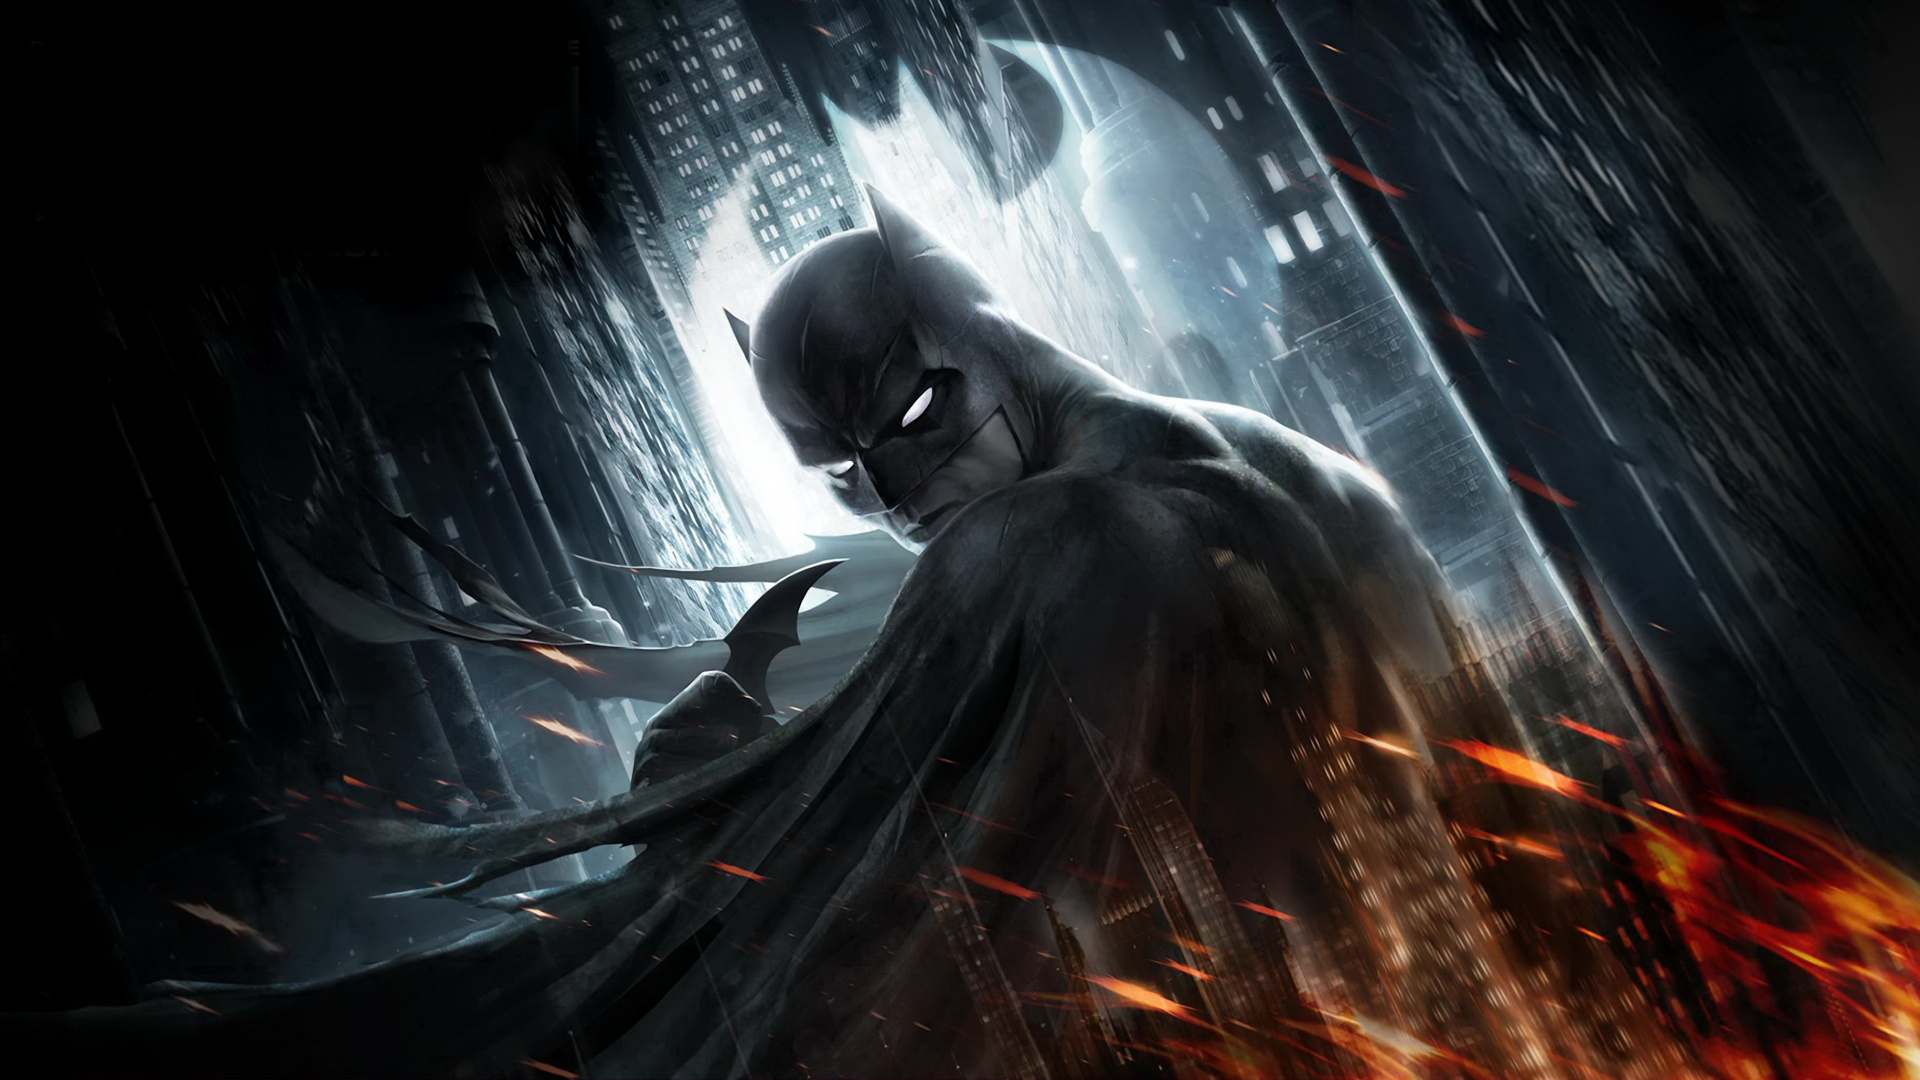 The Dark Knight Returns Full HD, HDTV, 1080p 16:9 Wallpapers, HD The Dark  Knight Returns 1920x1080 Backgrounds, Free Images Download